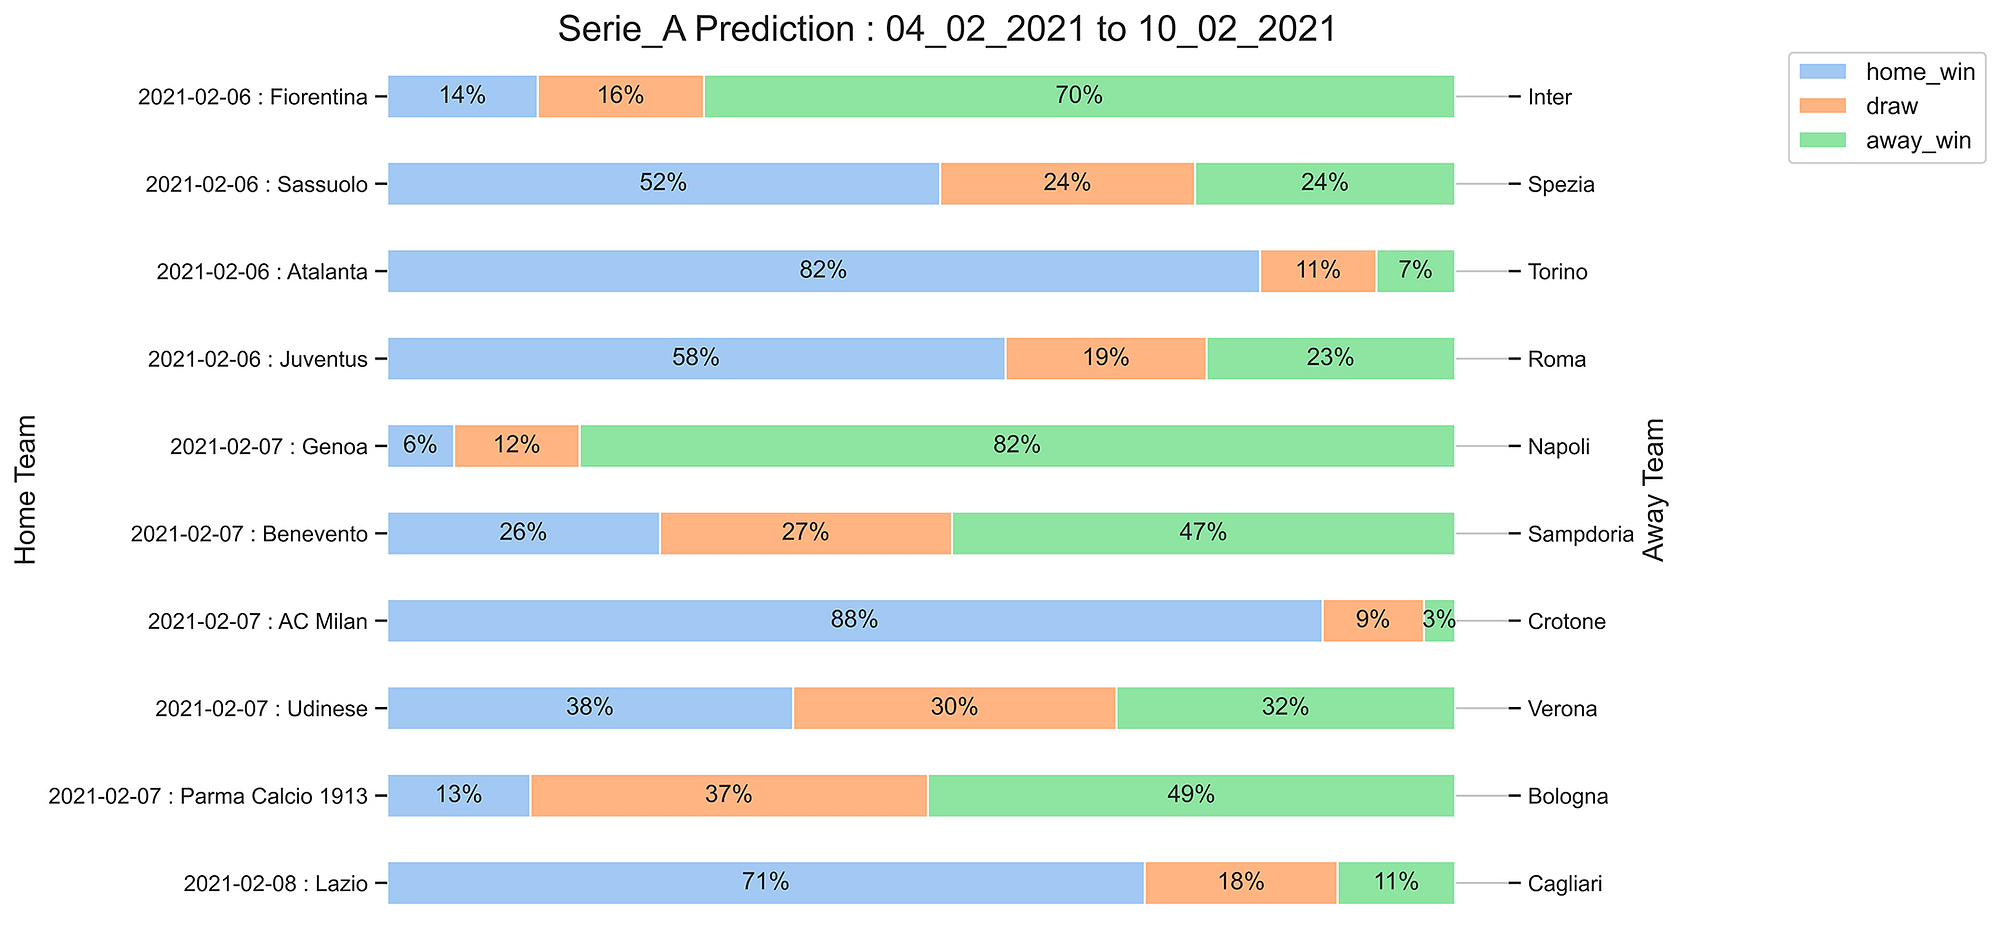 Serie_A_Prediction 04_02_2021